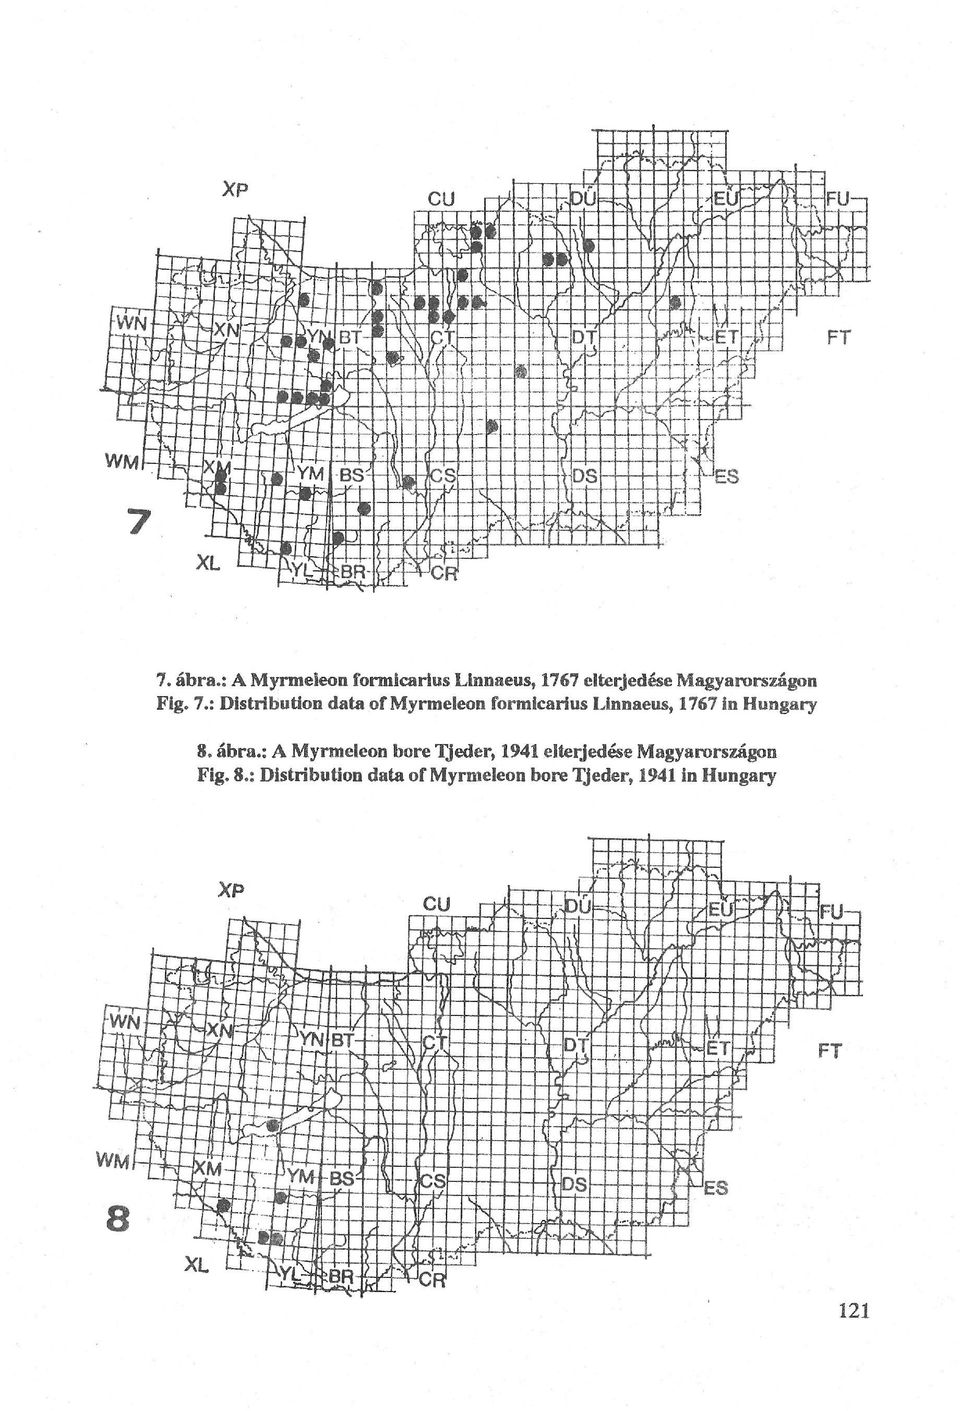 7.: Distribution data of Myrmeleon formicaríus Linnaeus, 1767 in Hungary